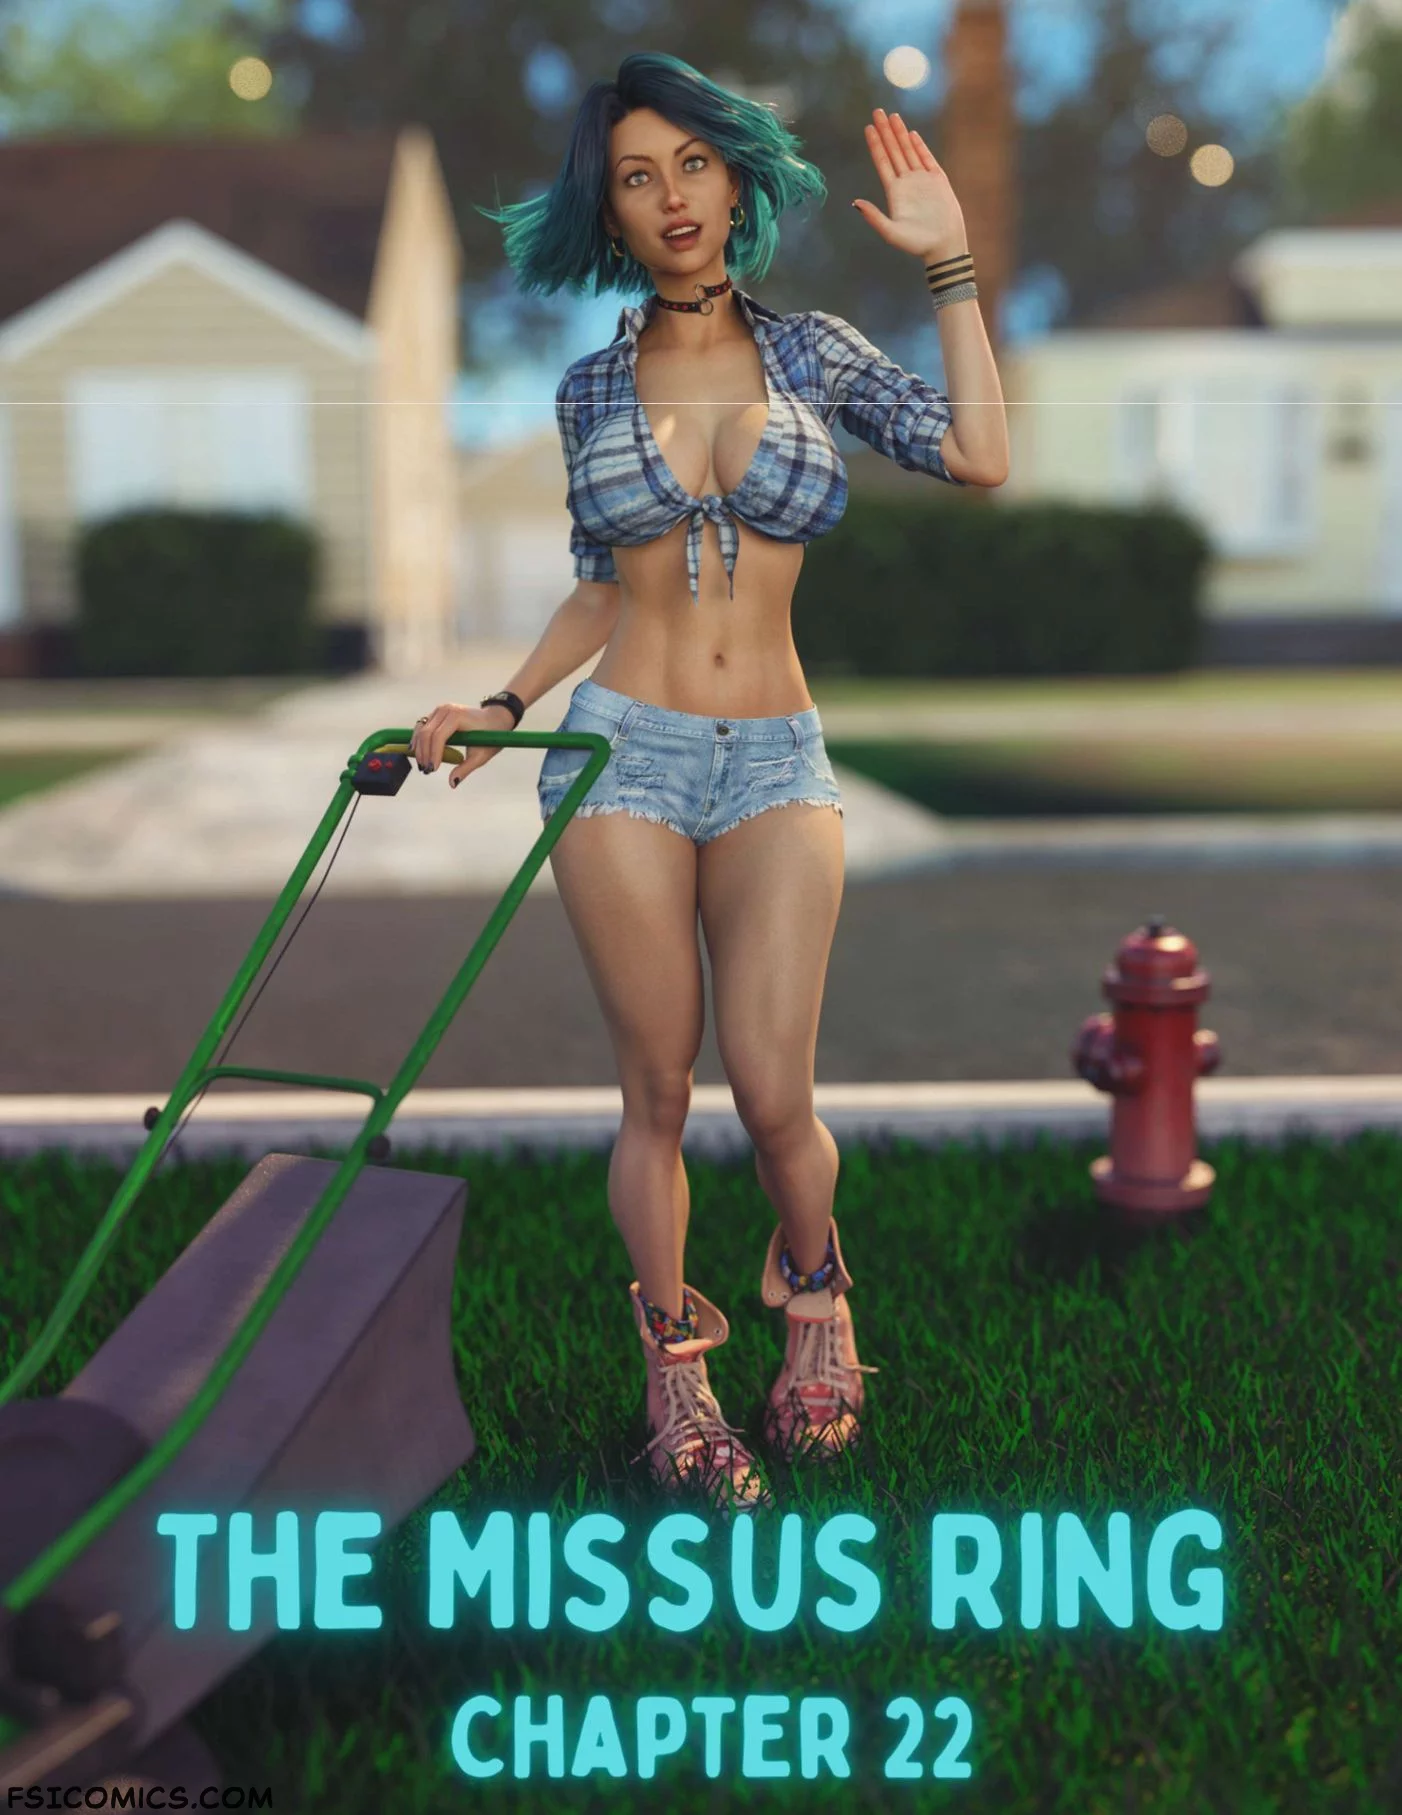 The Missus Ring Chapter 22 - Lexx228 | RawlyRawls - 123 - FSIComics